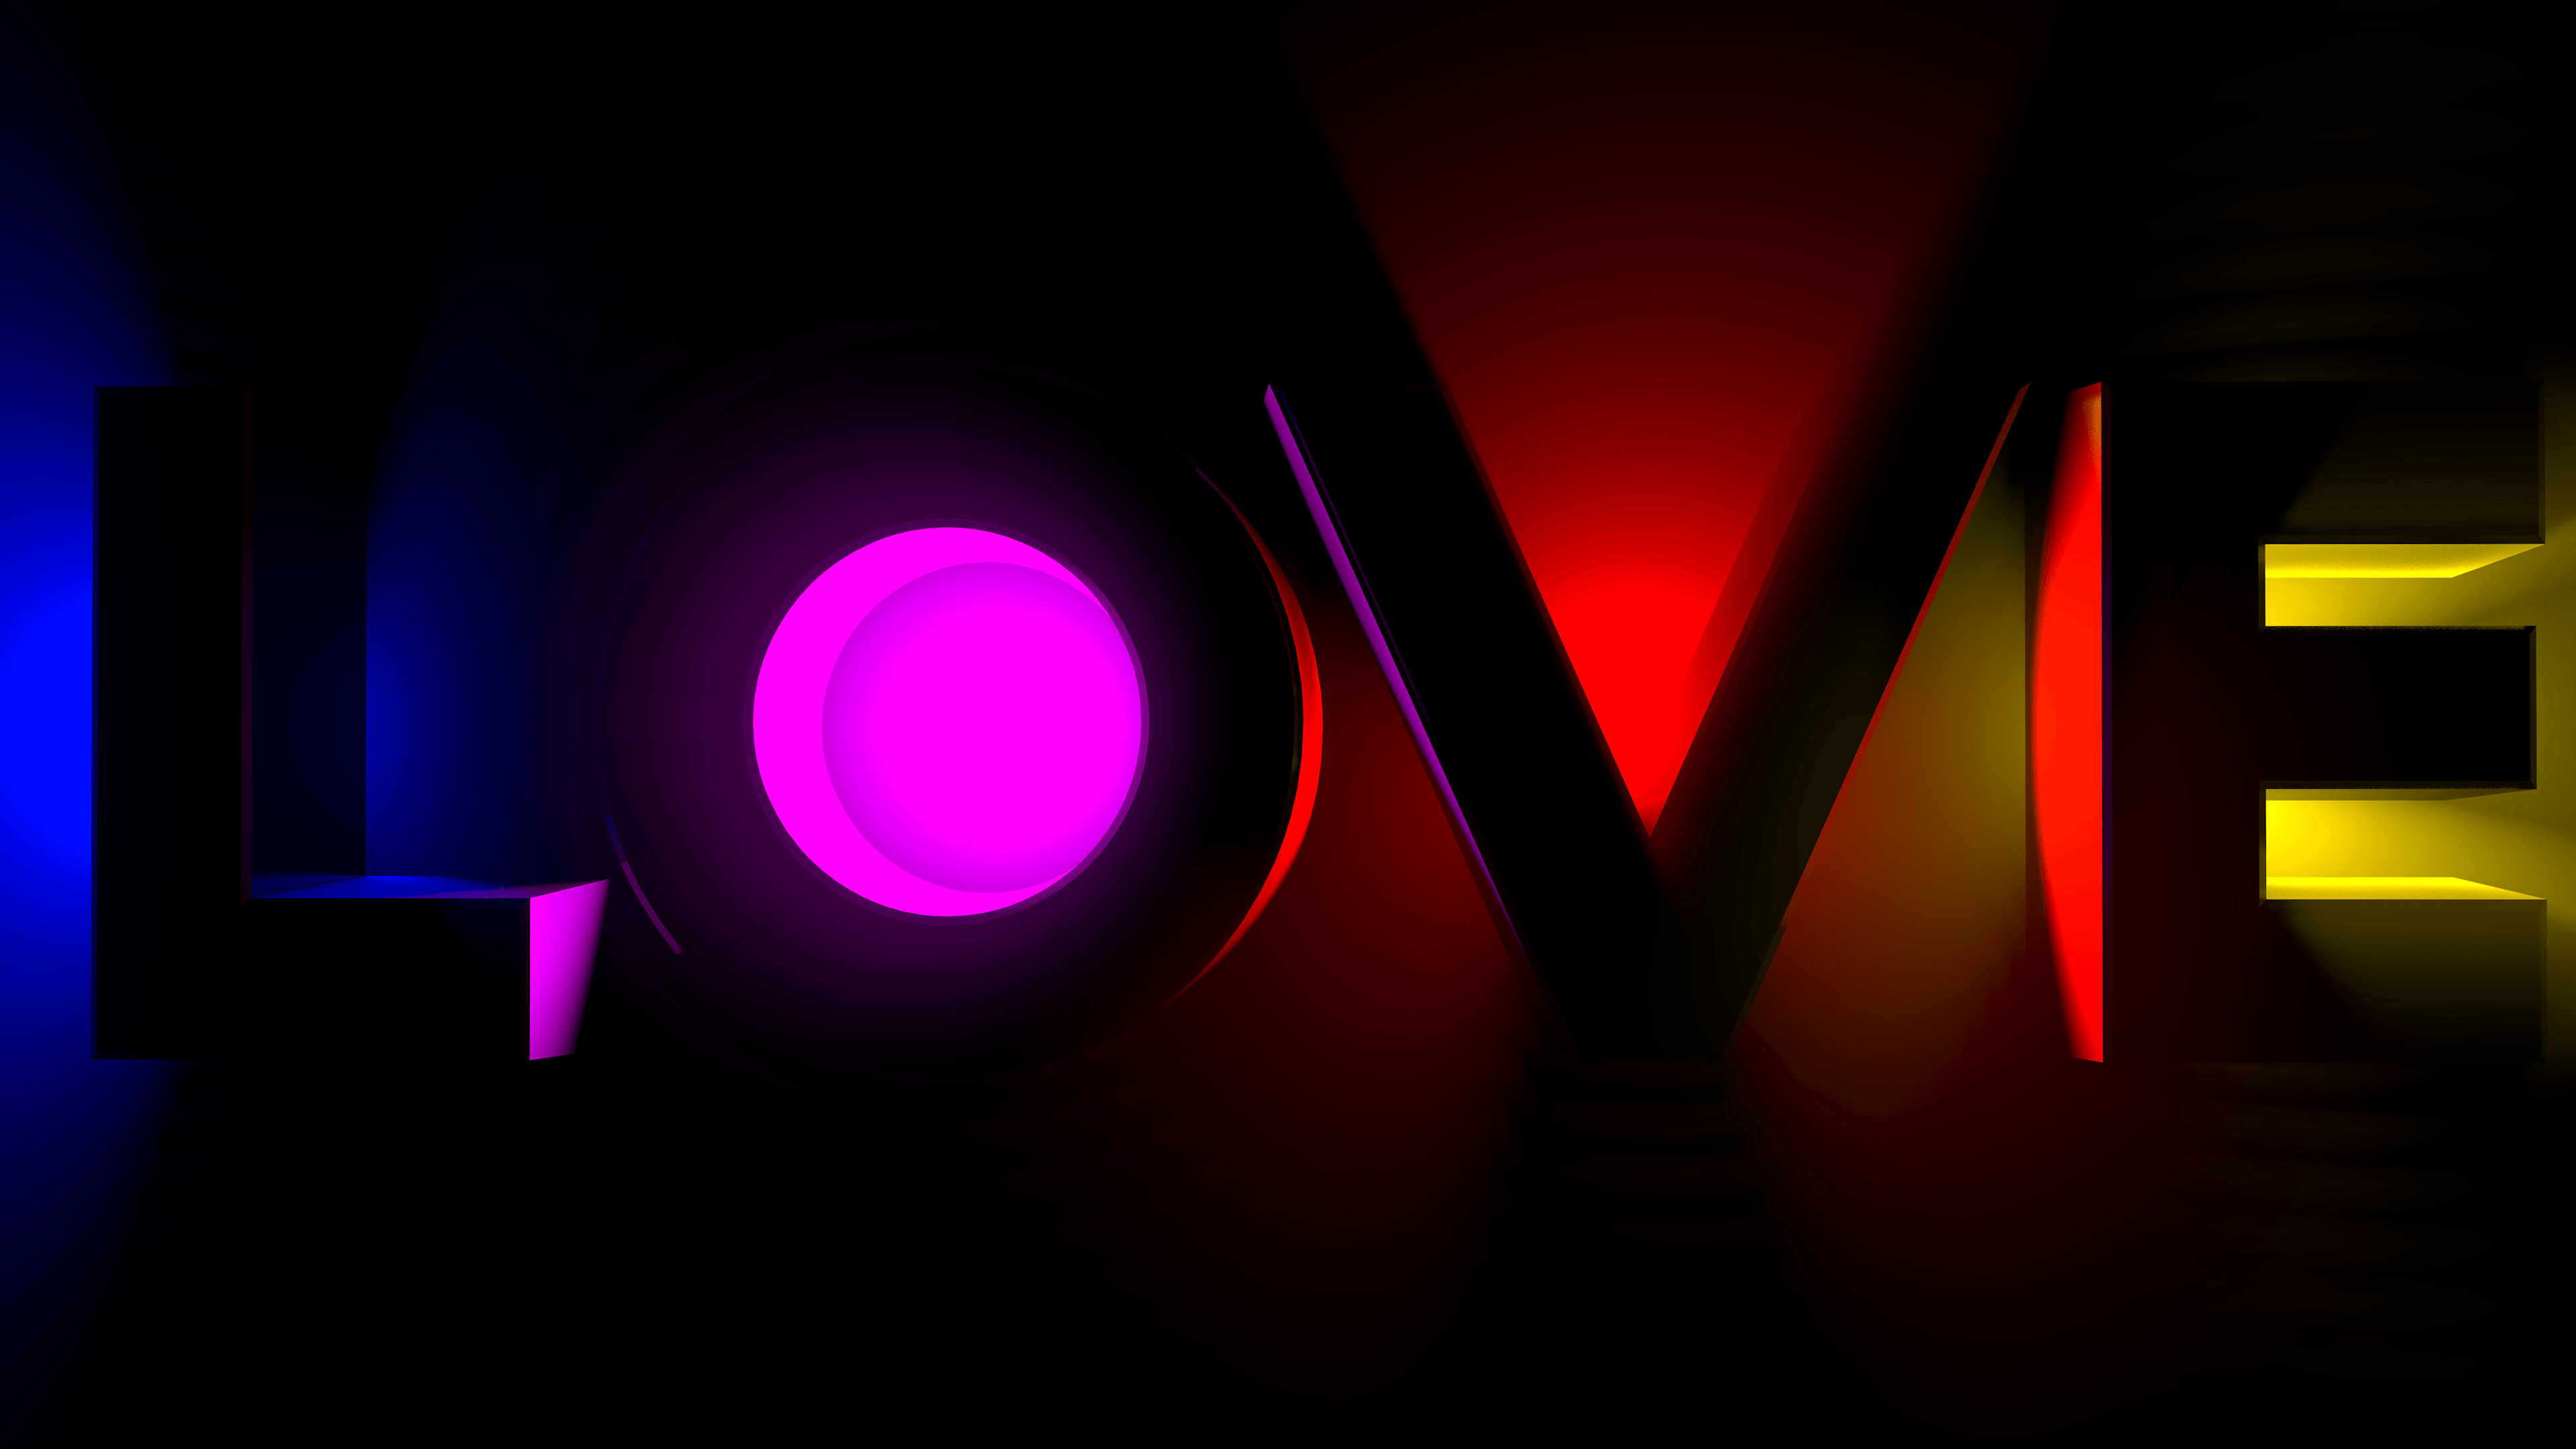 #Neon lights, #Valentines Day, #Dark background, #Colorful, #Neon sign, K, D, #Love HD Wallpaper